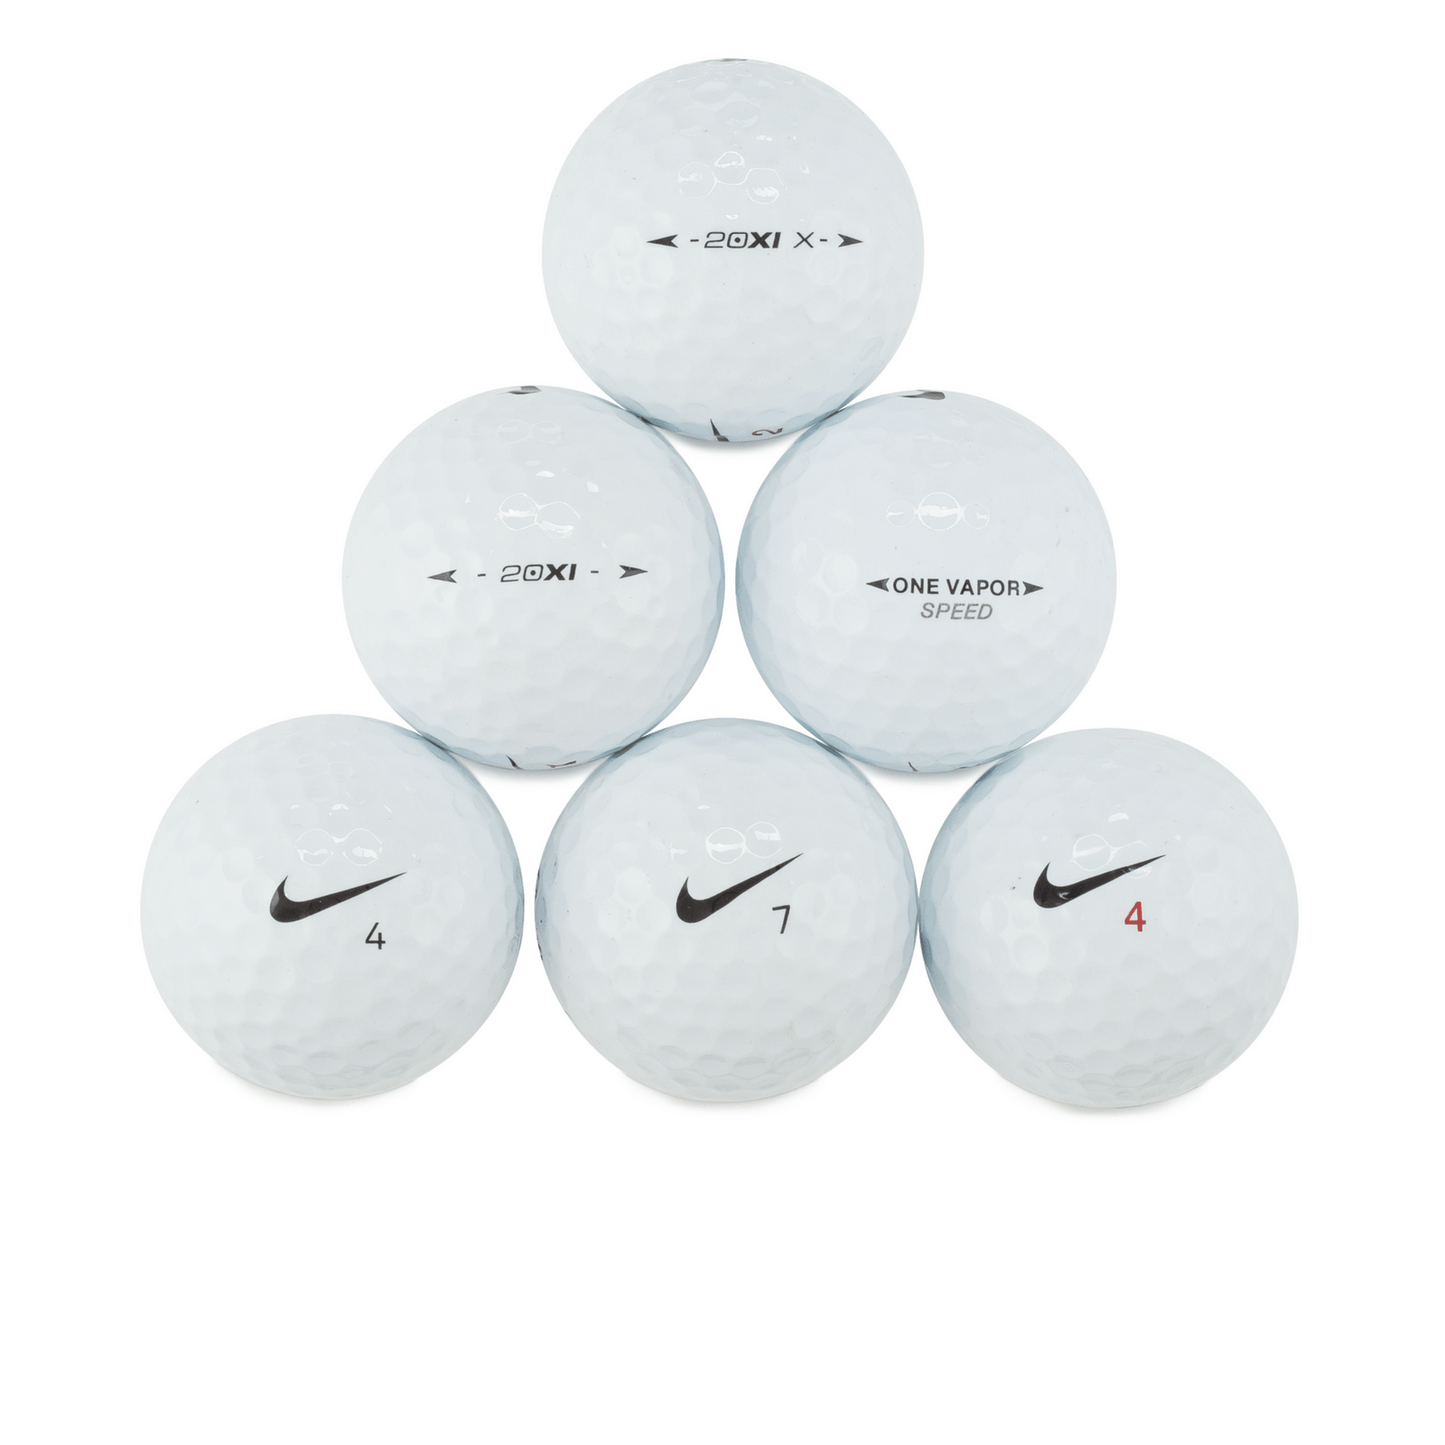 Used Nike 20XI Mix Golf Balls - 1 Dozen